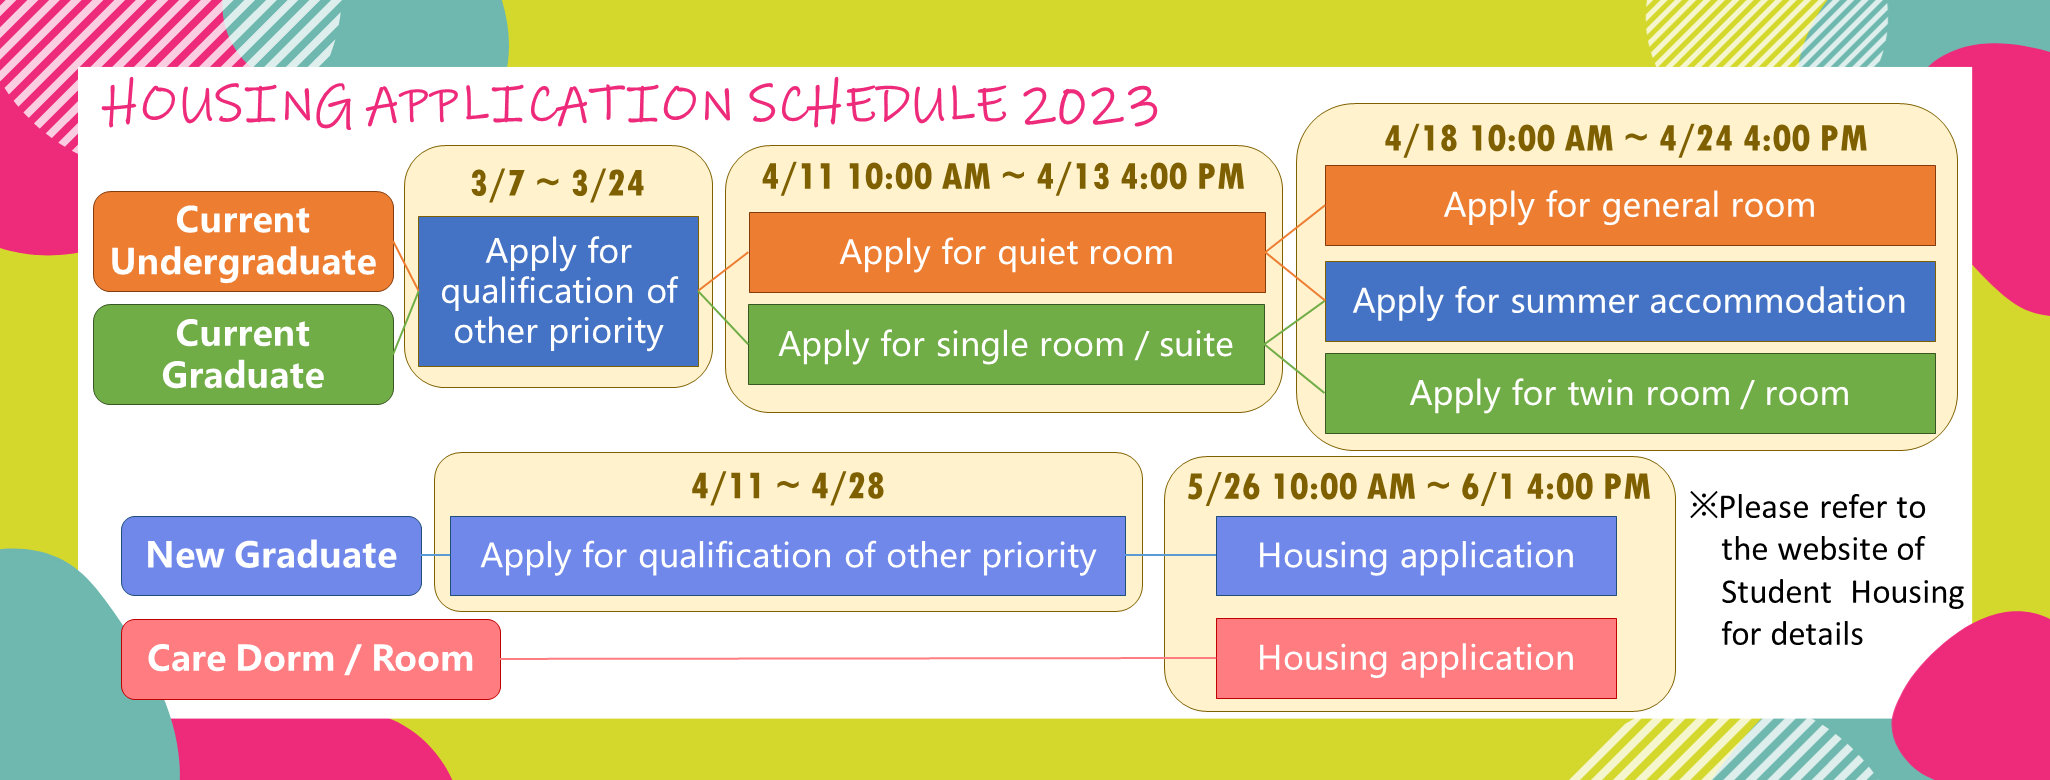 Housing Application Schedule 2023